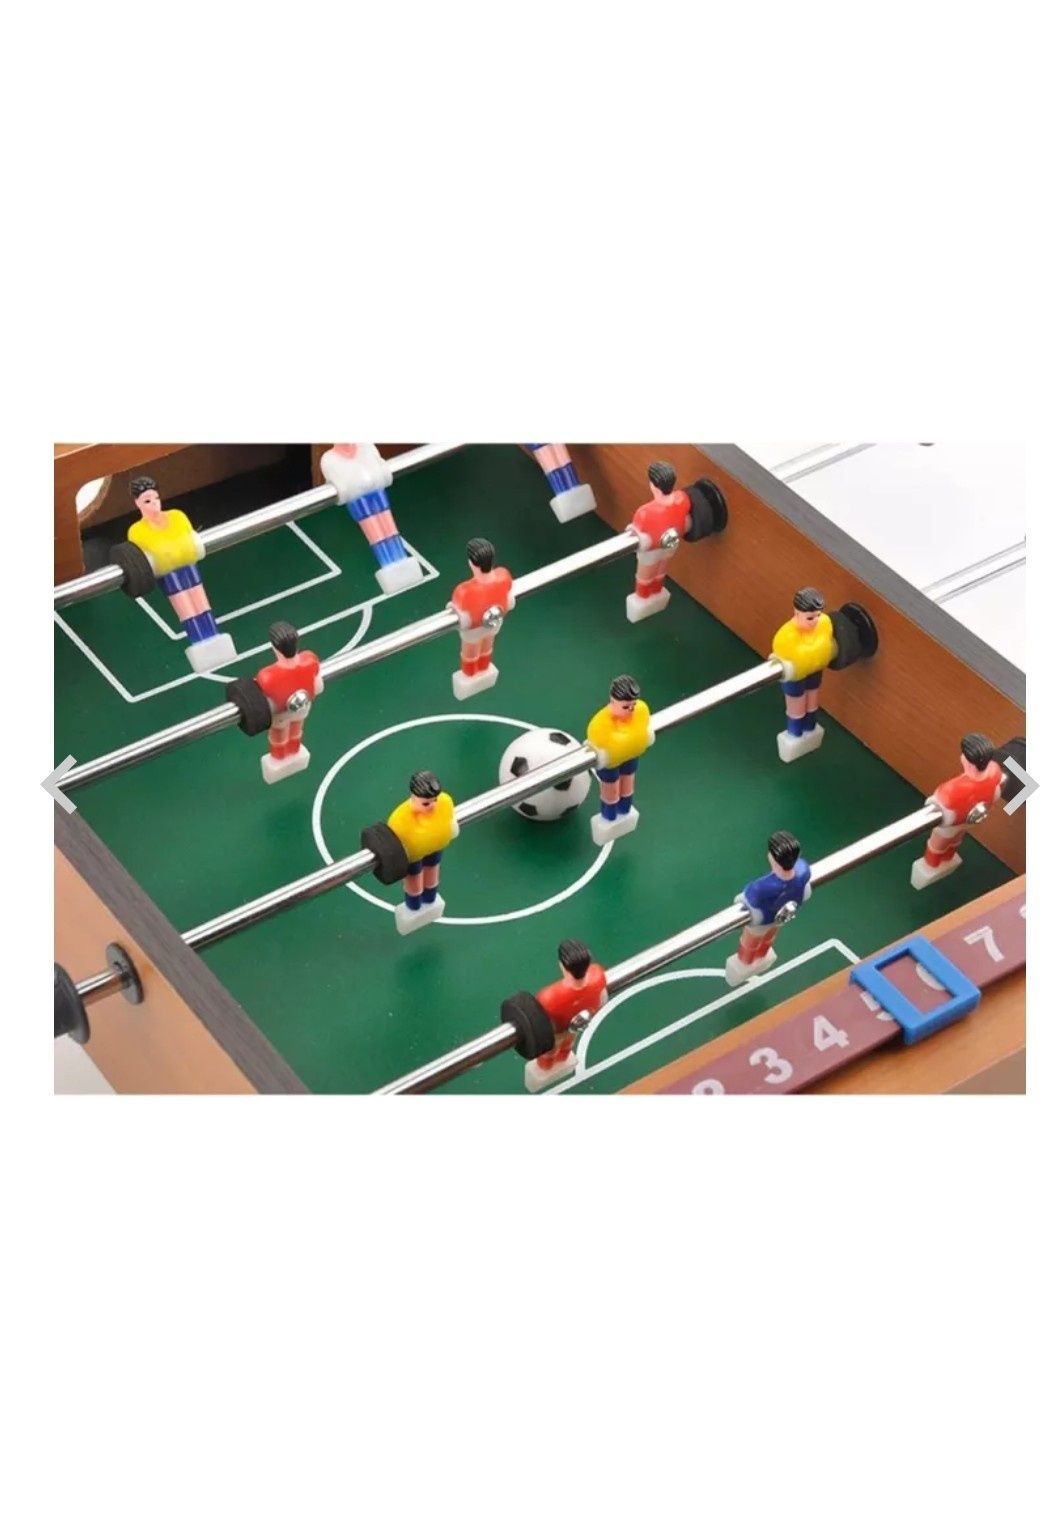 Fotbal De Masa joc de masa din lemn cu 12 jucatori